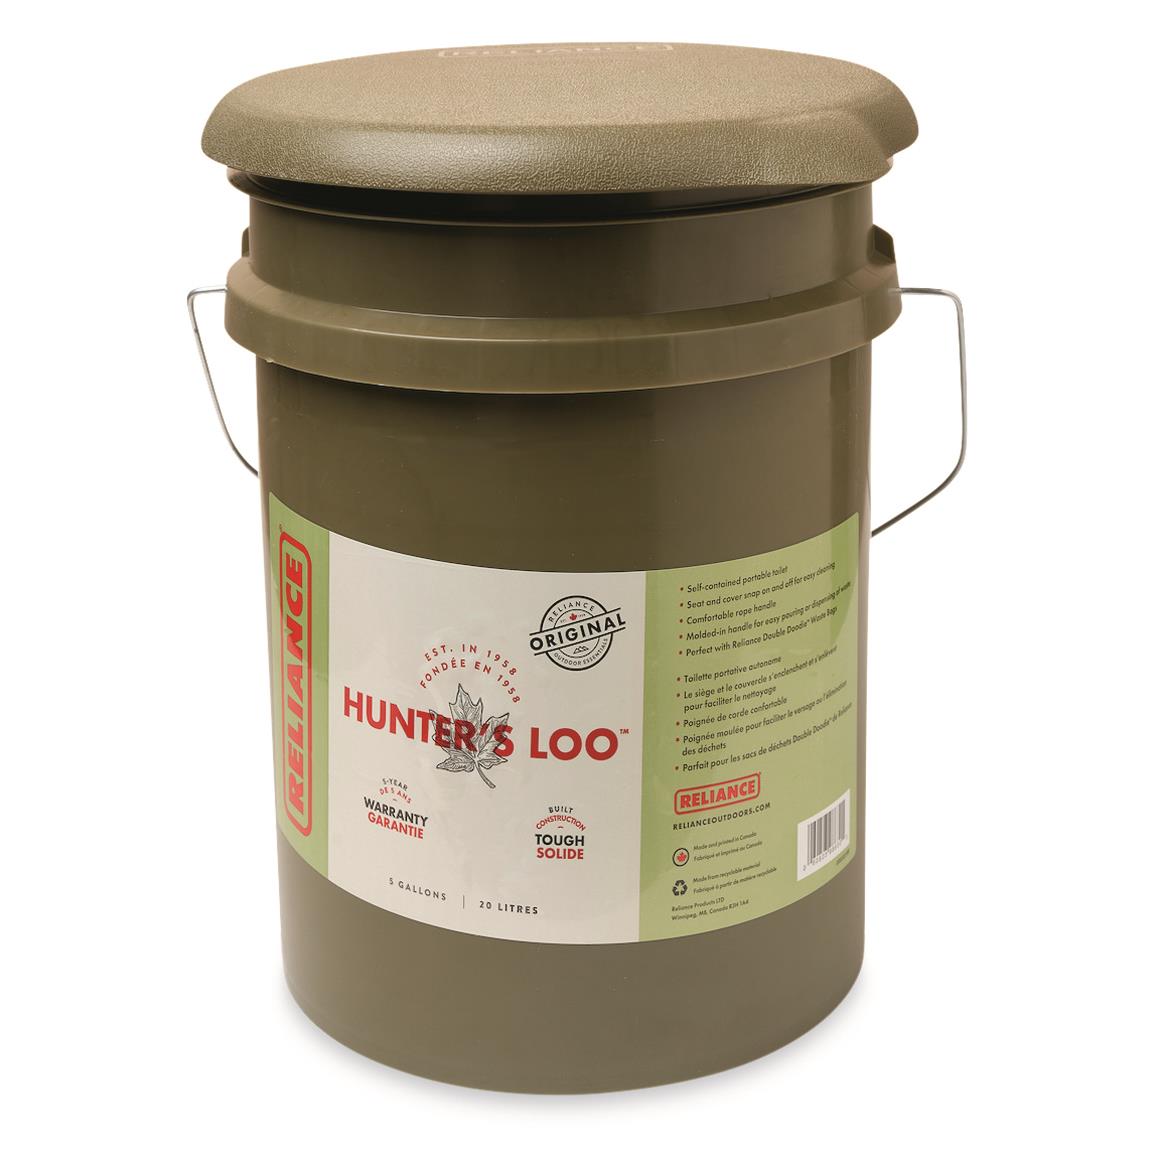 Reliance Hunter's Loo Portable Toilet, Green Camo